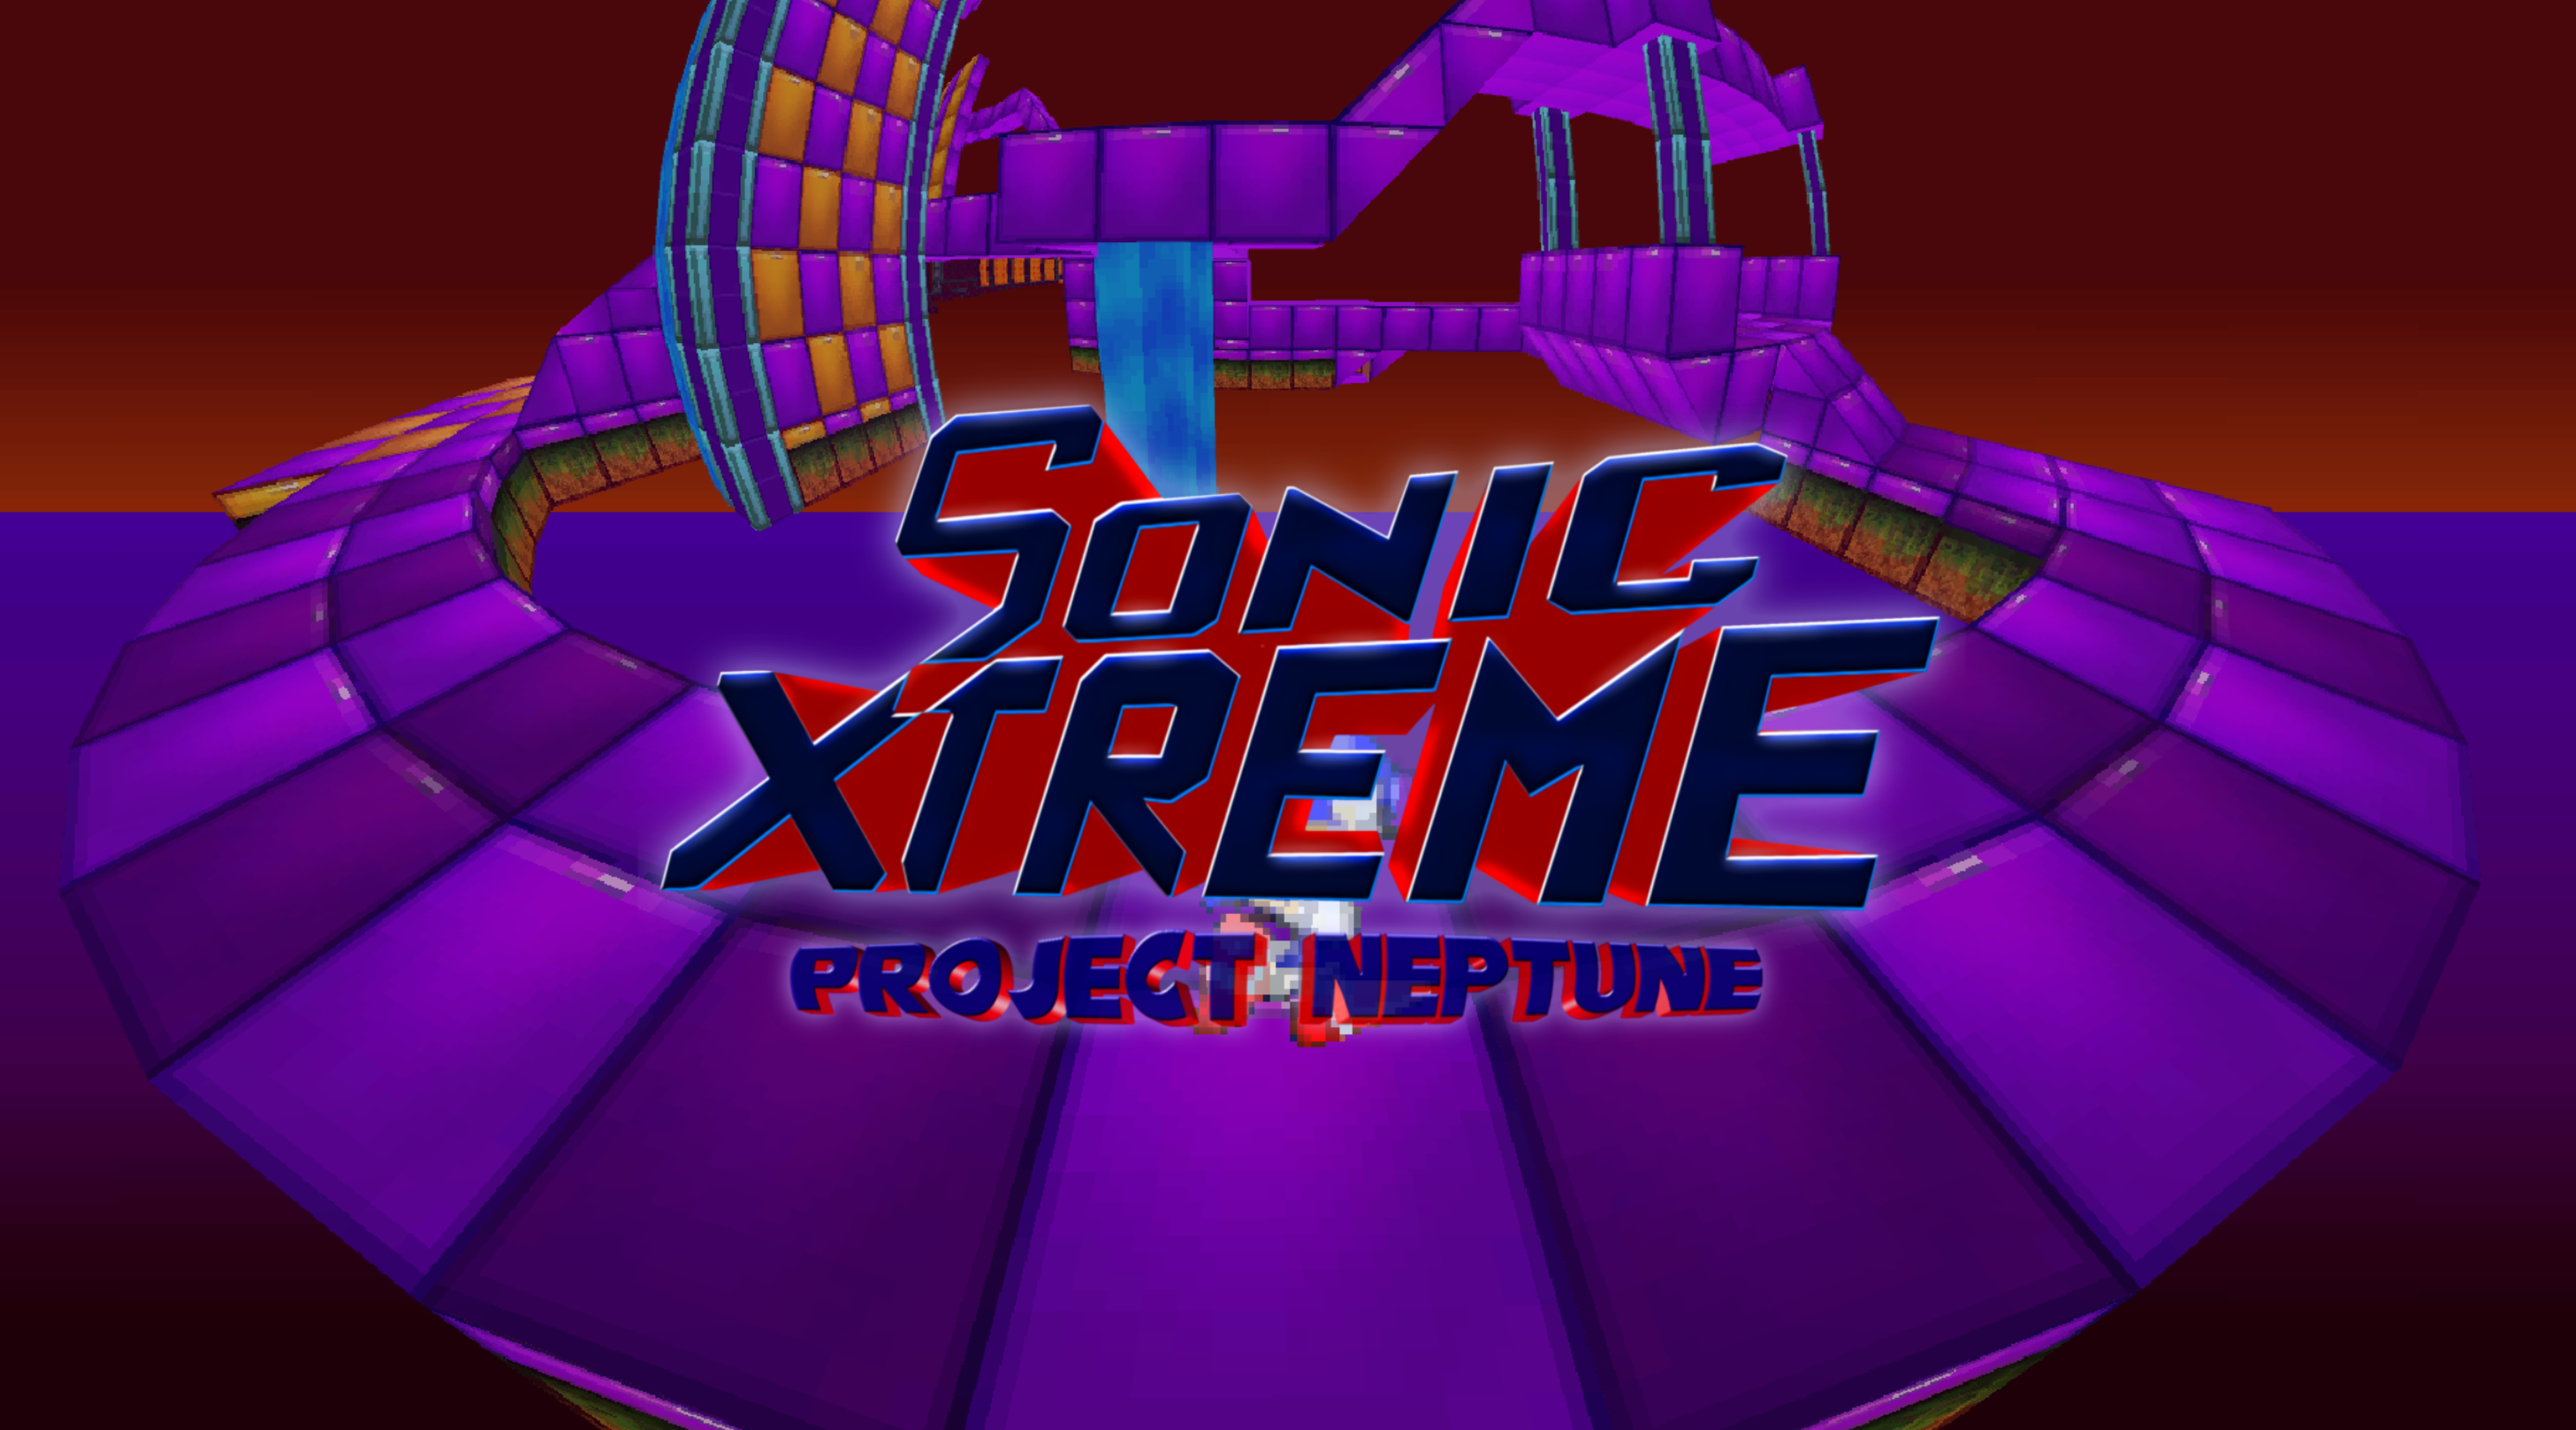 Sonic X-treme: Project Neptune